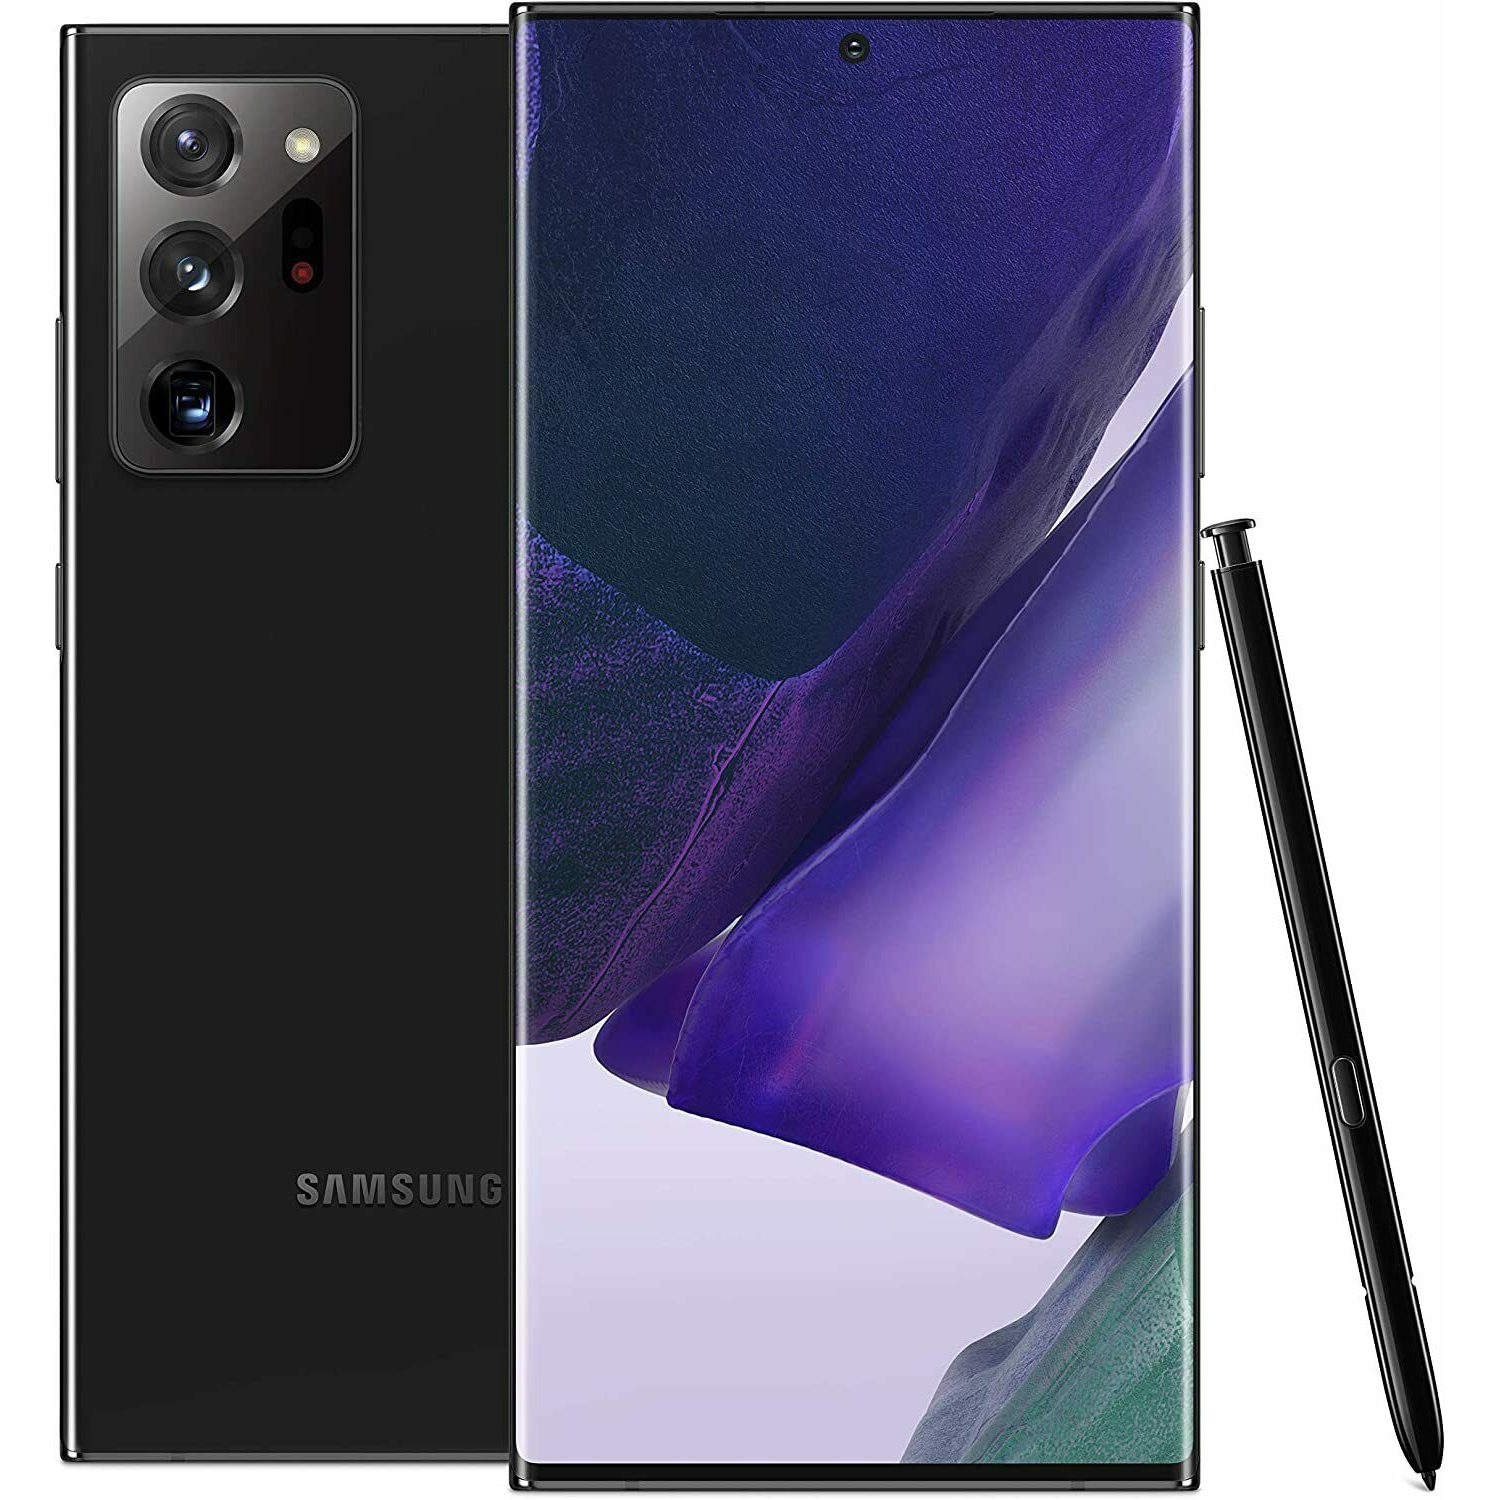 Samsung Galaxy Note 20 Ultra 256/8GB RAM (SM-N985F/DS) International Model - GSM Unlocked Smartphone - Mystic Black - Brand New